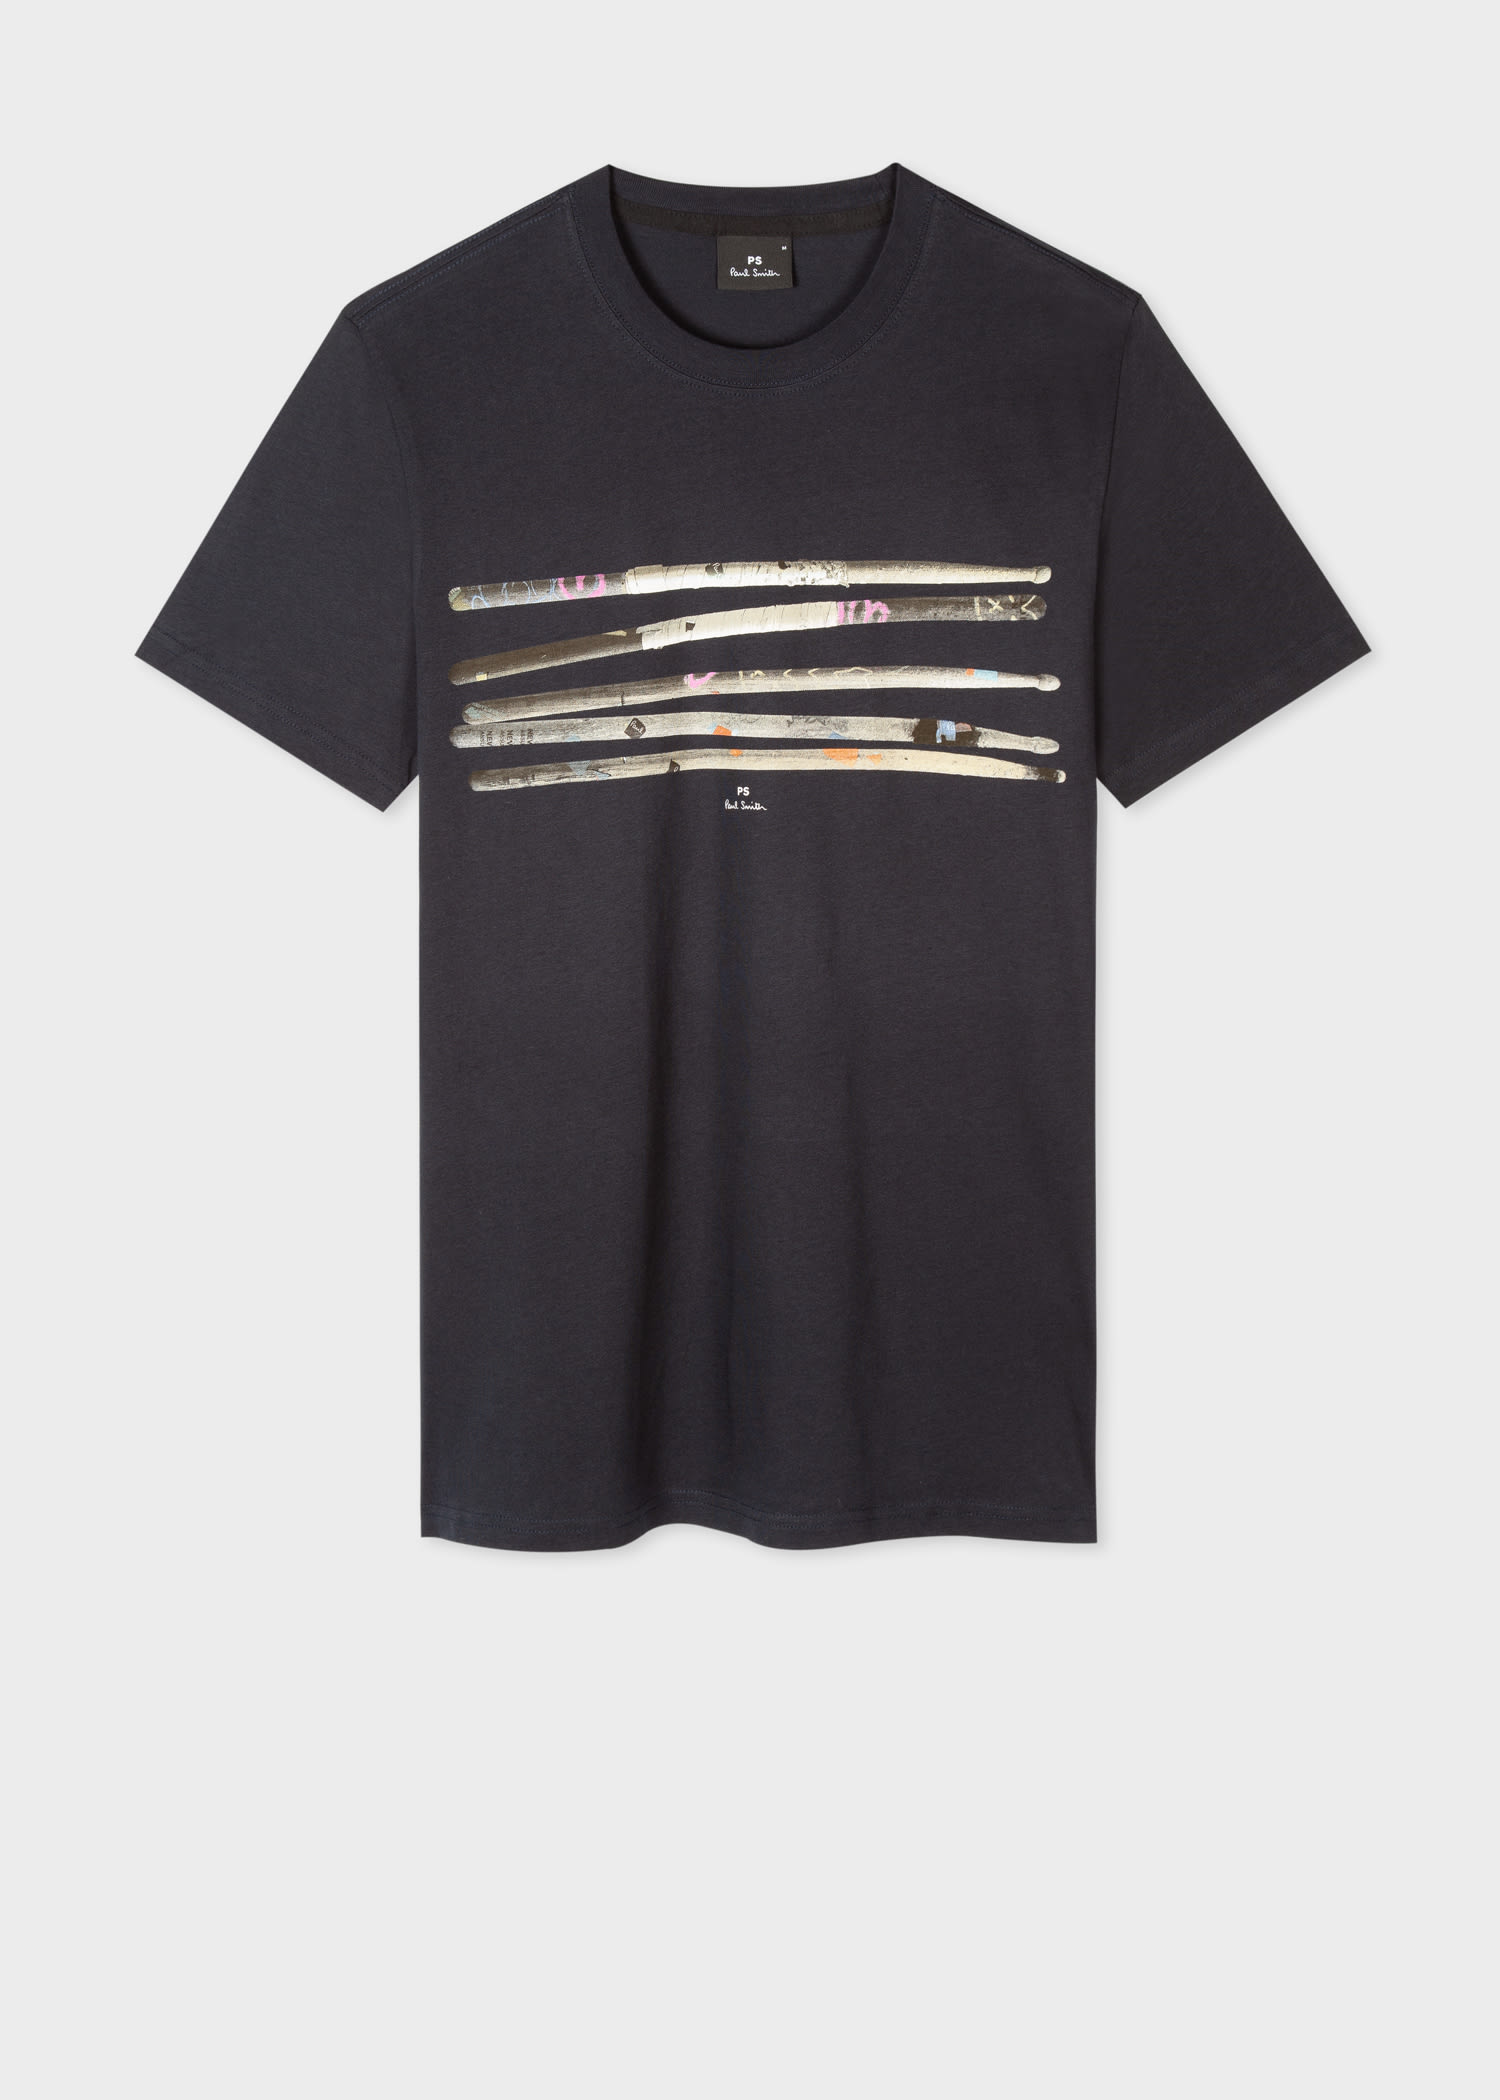 Men's Designer T-Shirts | Printed, Plain, & Long Sleeve - Paul Smith